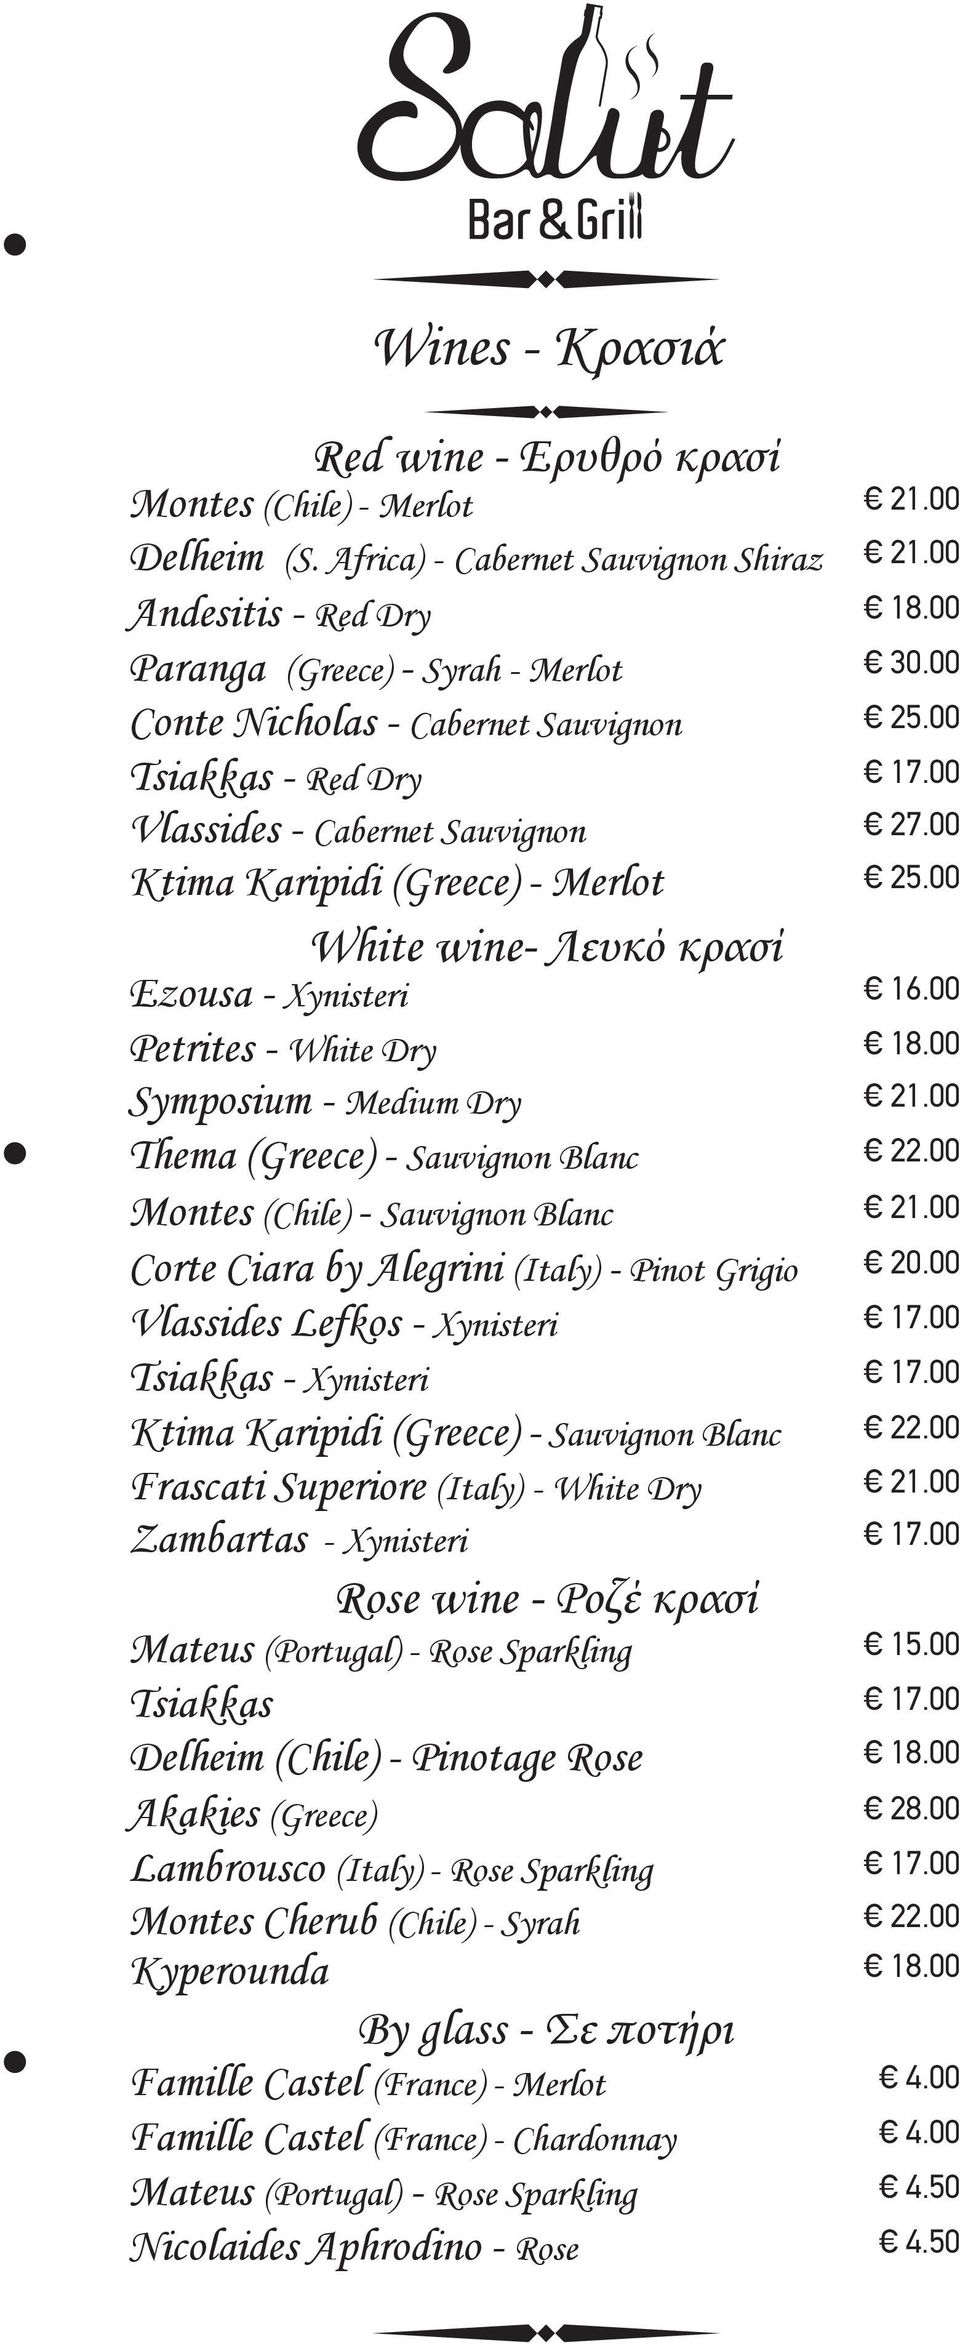 00 Petrites - White Dry 18.00 Symposium - Medium Dry 21.00 Thema (Greece) - Sauvignon Blanc 22.00 Montes (Chile) - Sauvignon Blanc 21.00 Corte Ciara by Alegrini (Italy) - Pinot Grigio 20.